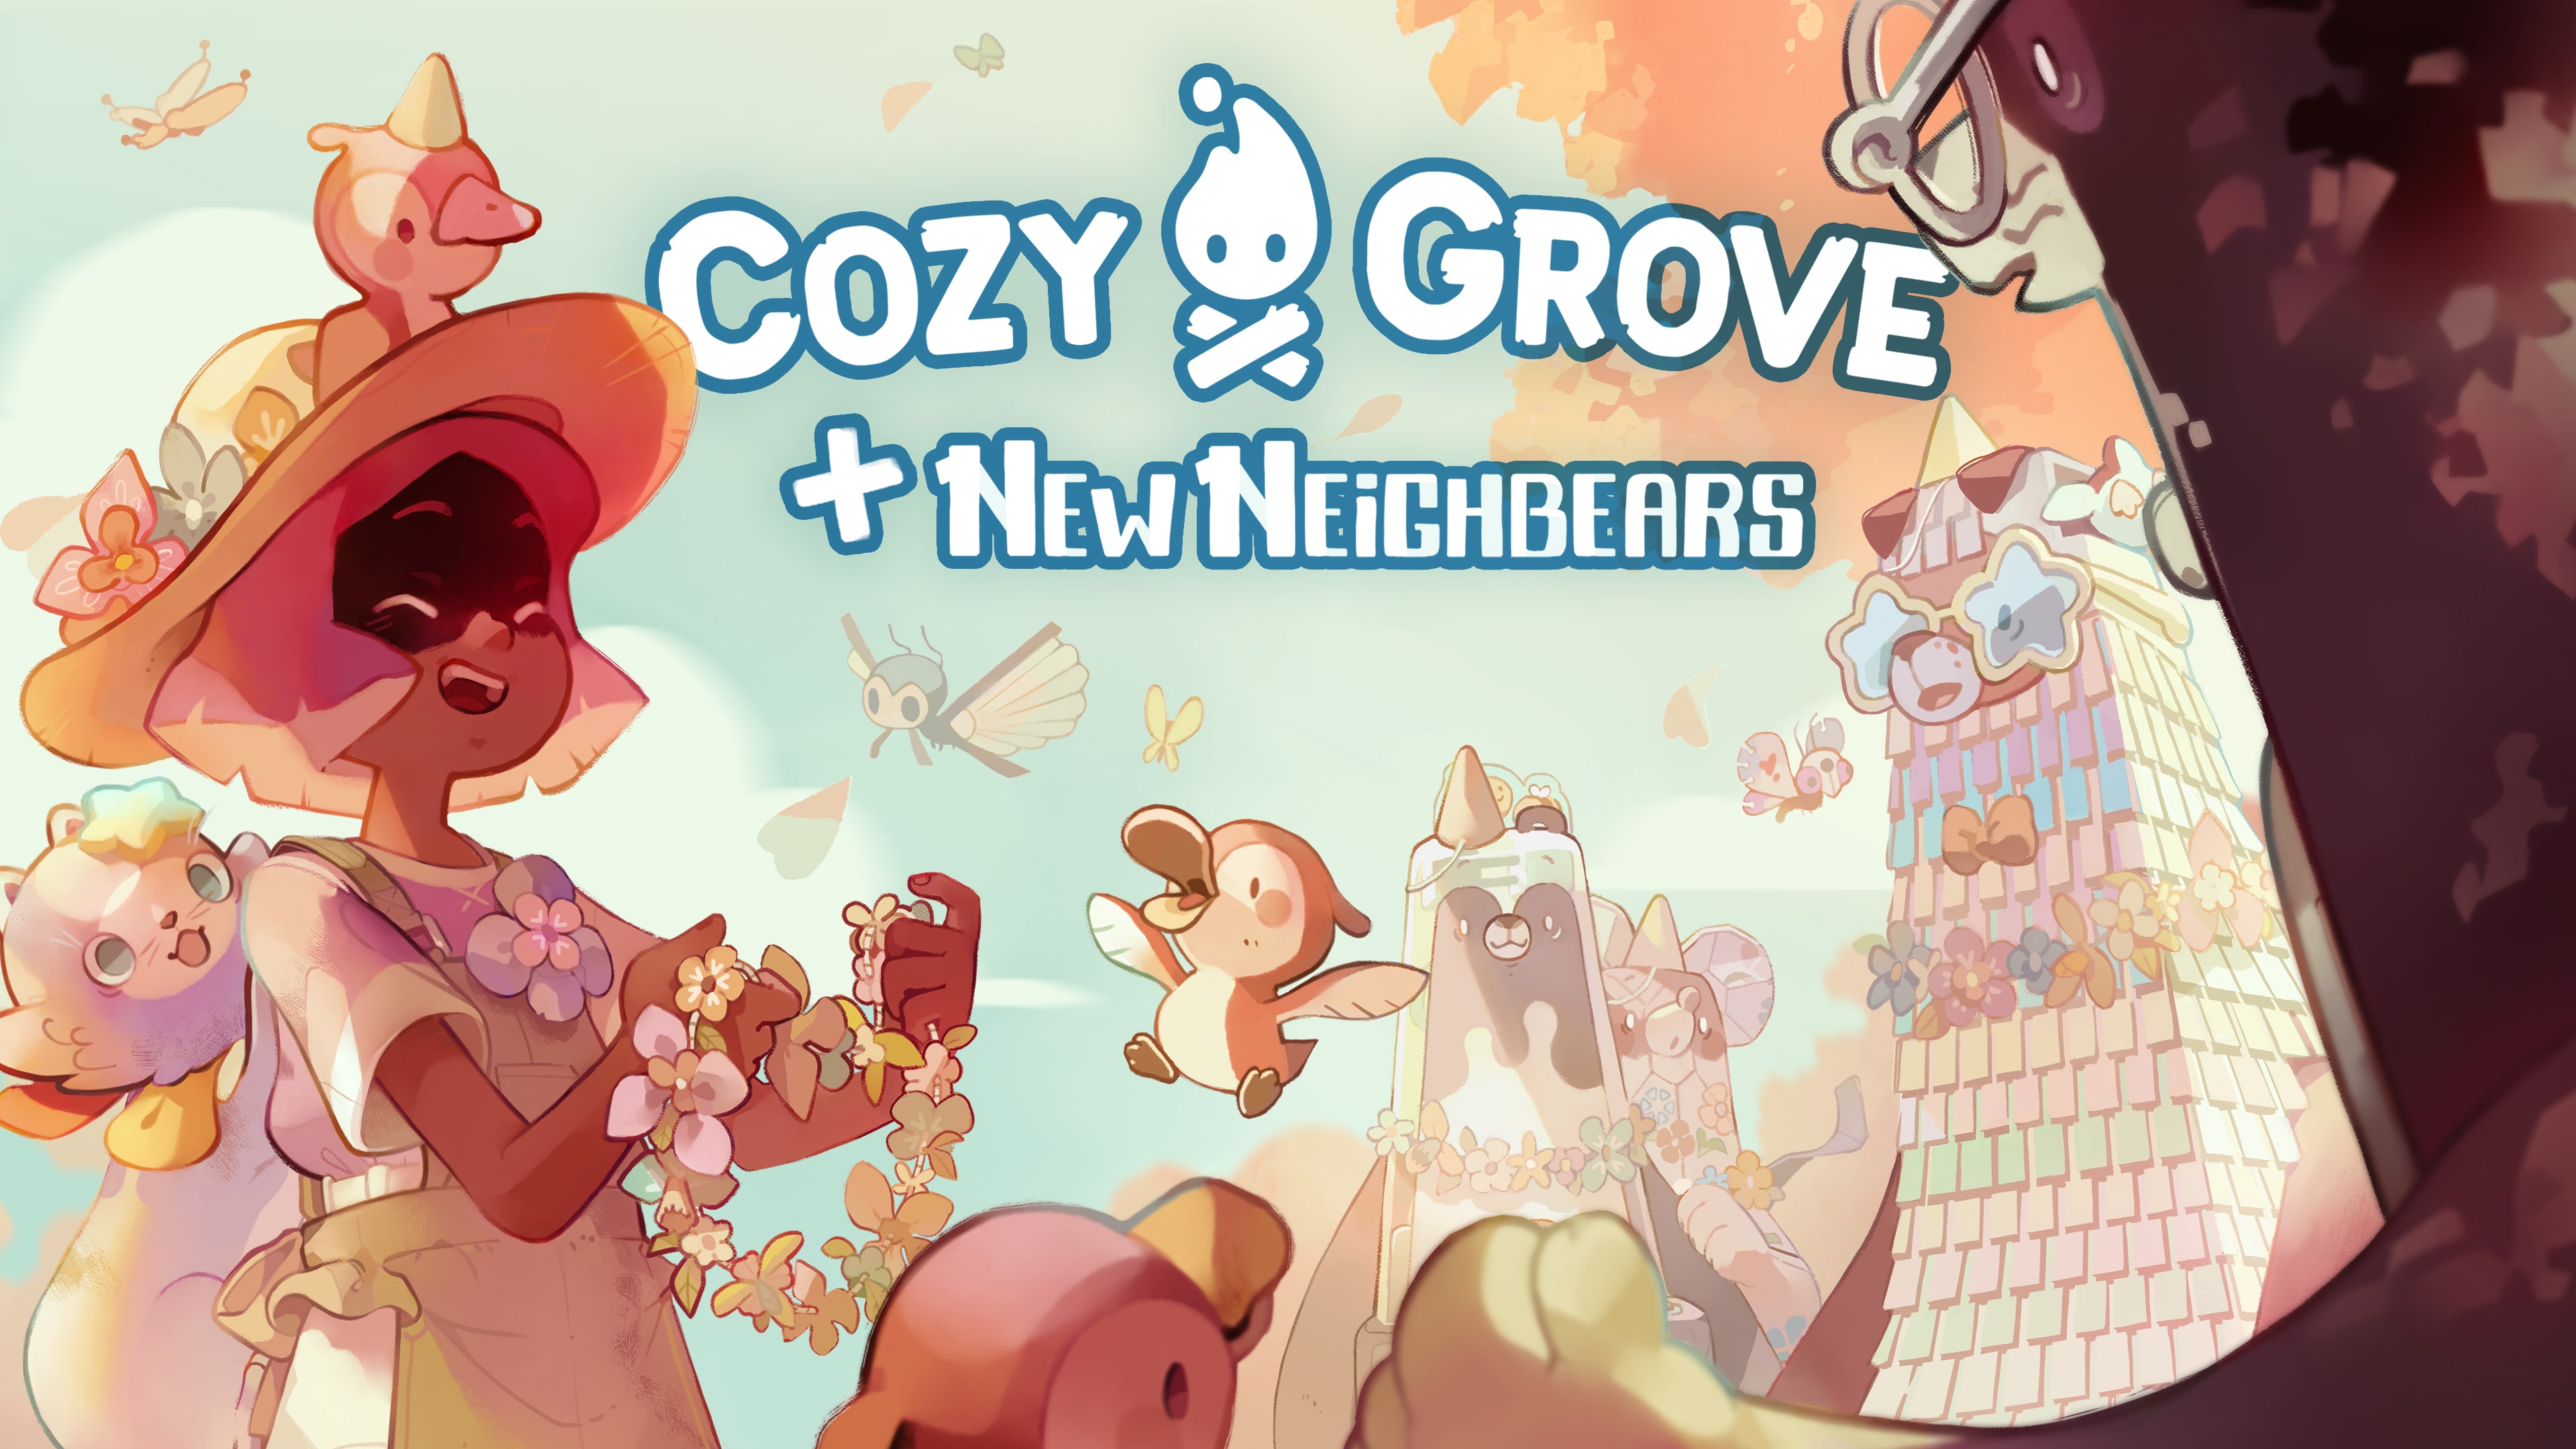 Cozy Grove + New Neighbears